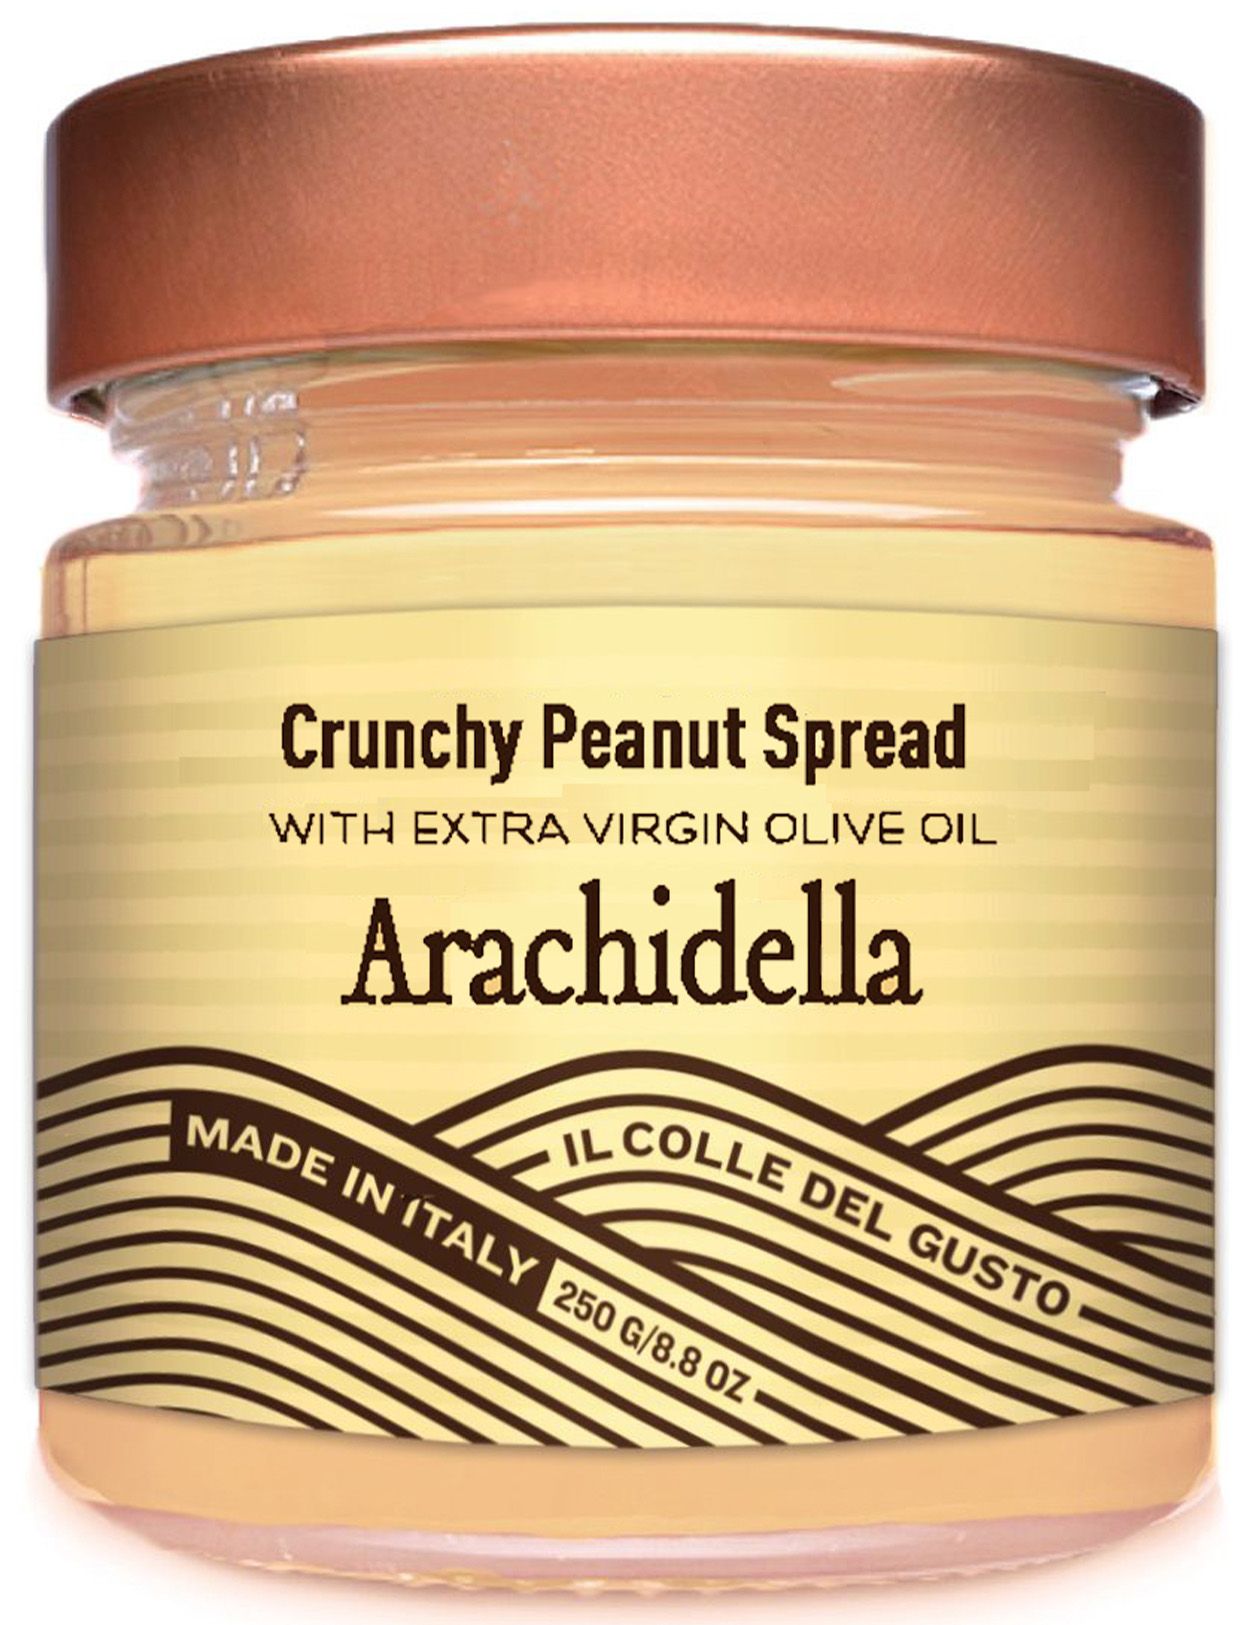 Arachidella - Crunchy Peanut Spread with Extra Virgin Olive Oil